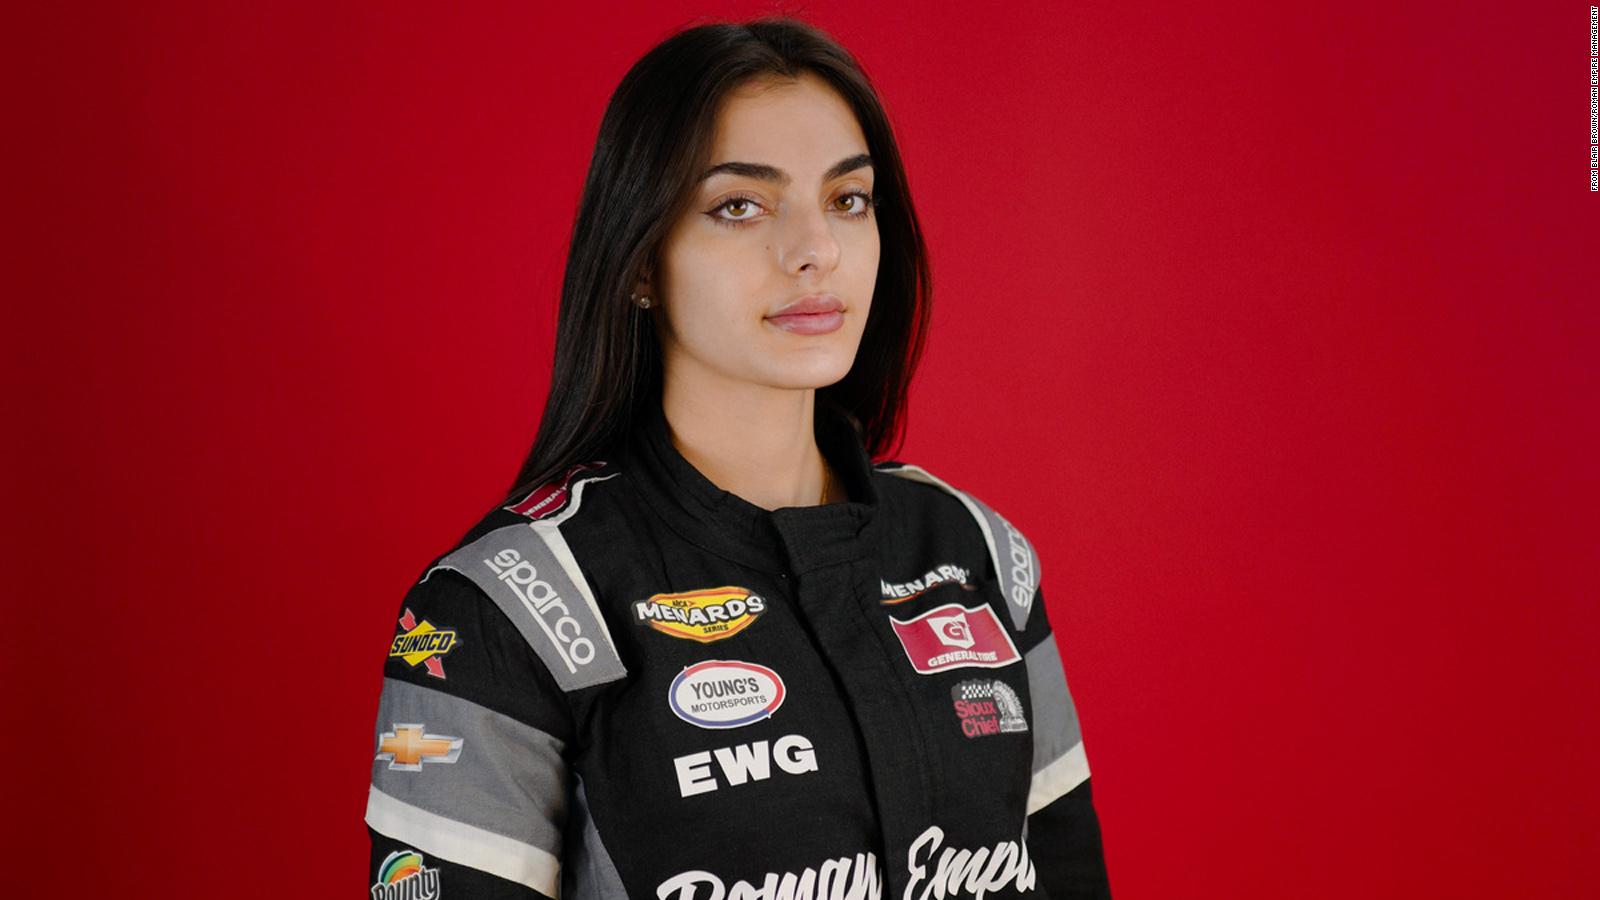 Nascars First Arab American Female Driver To Make Her Debut At Daytona